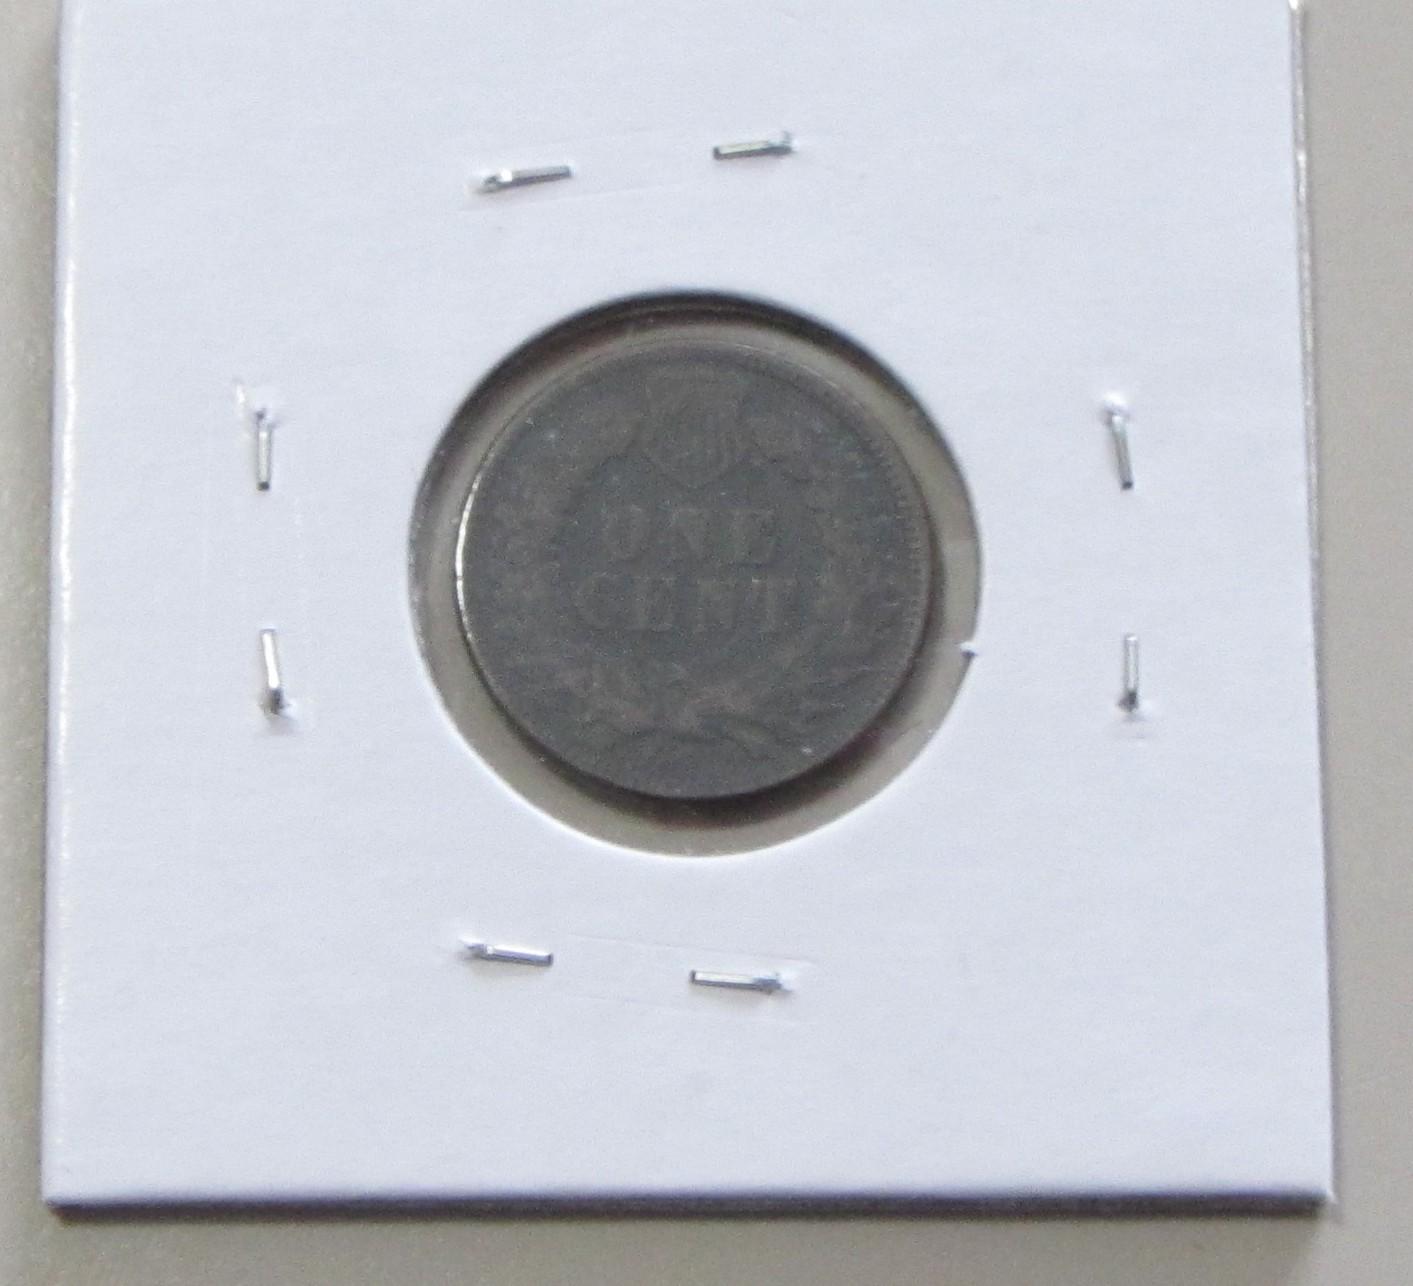 1879 Indian Head Cent - Better Date